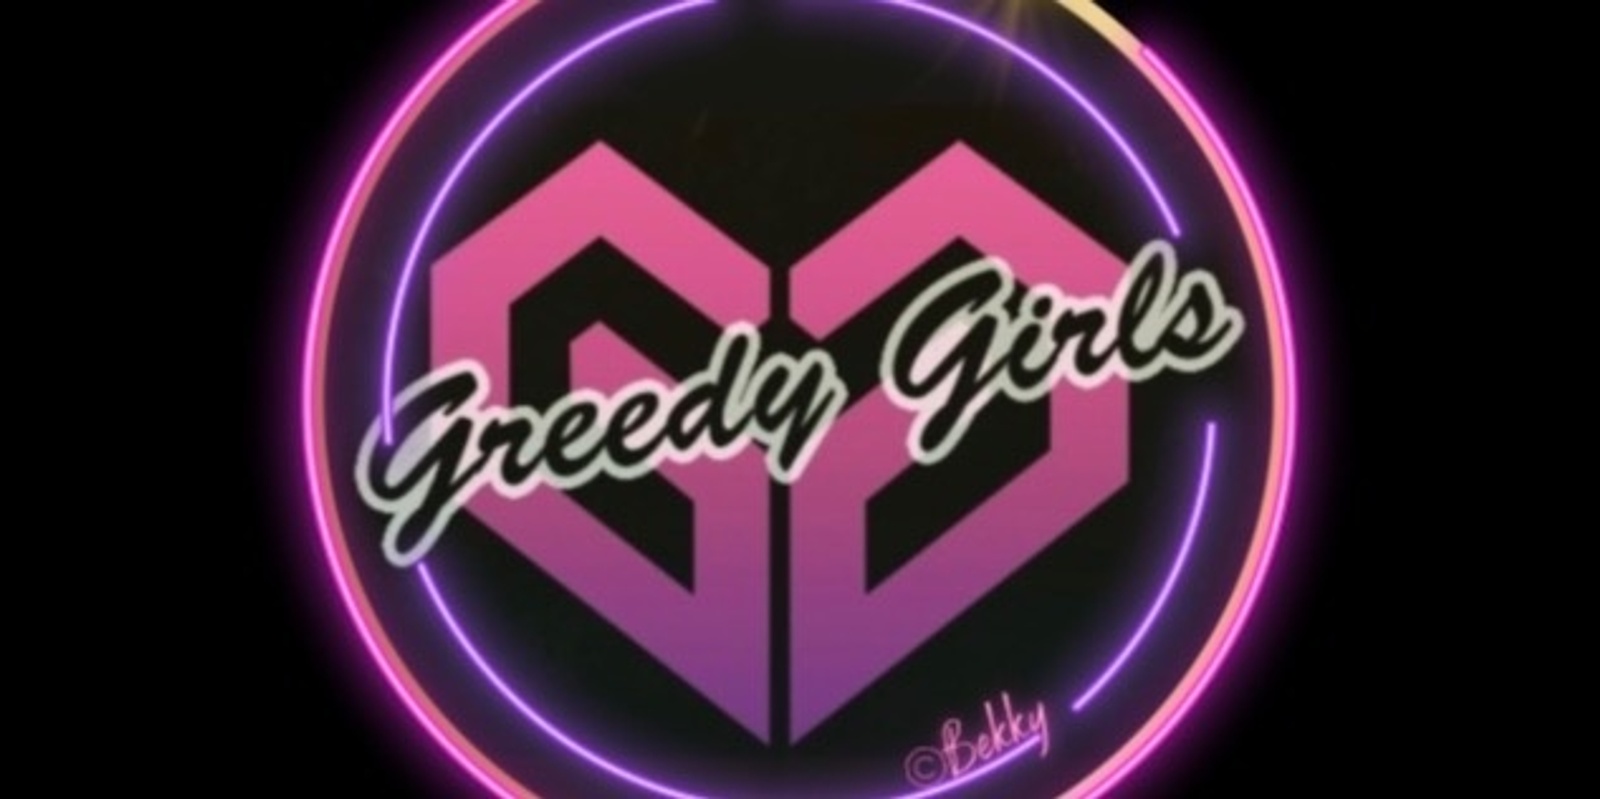 Banner image for Greedy Girls Lady Social Invite